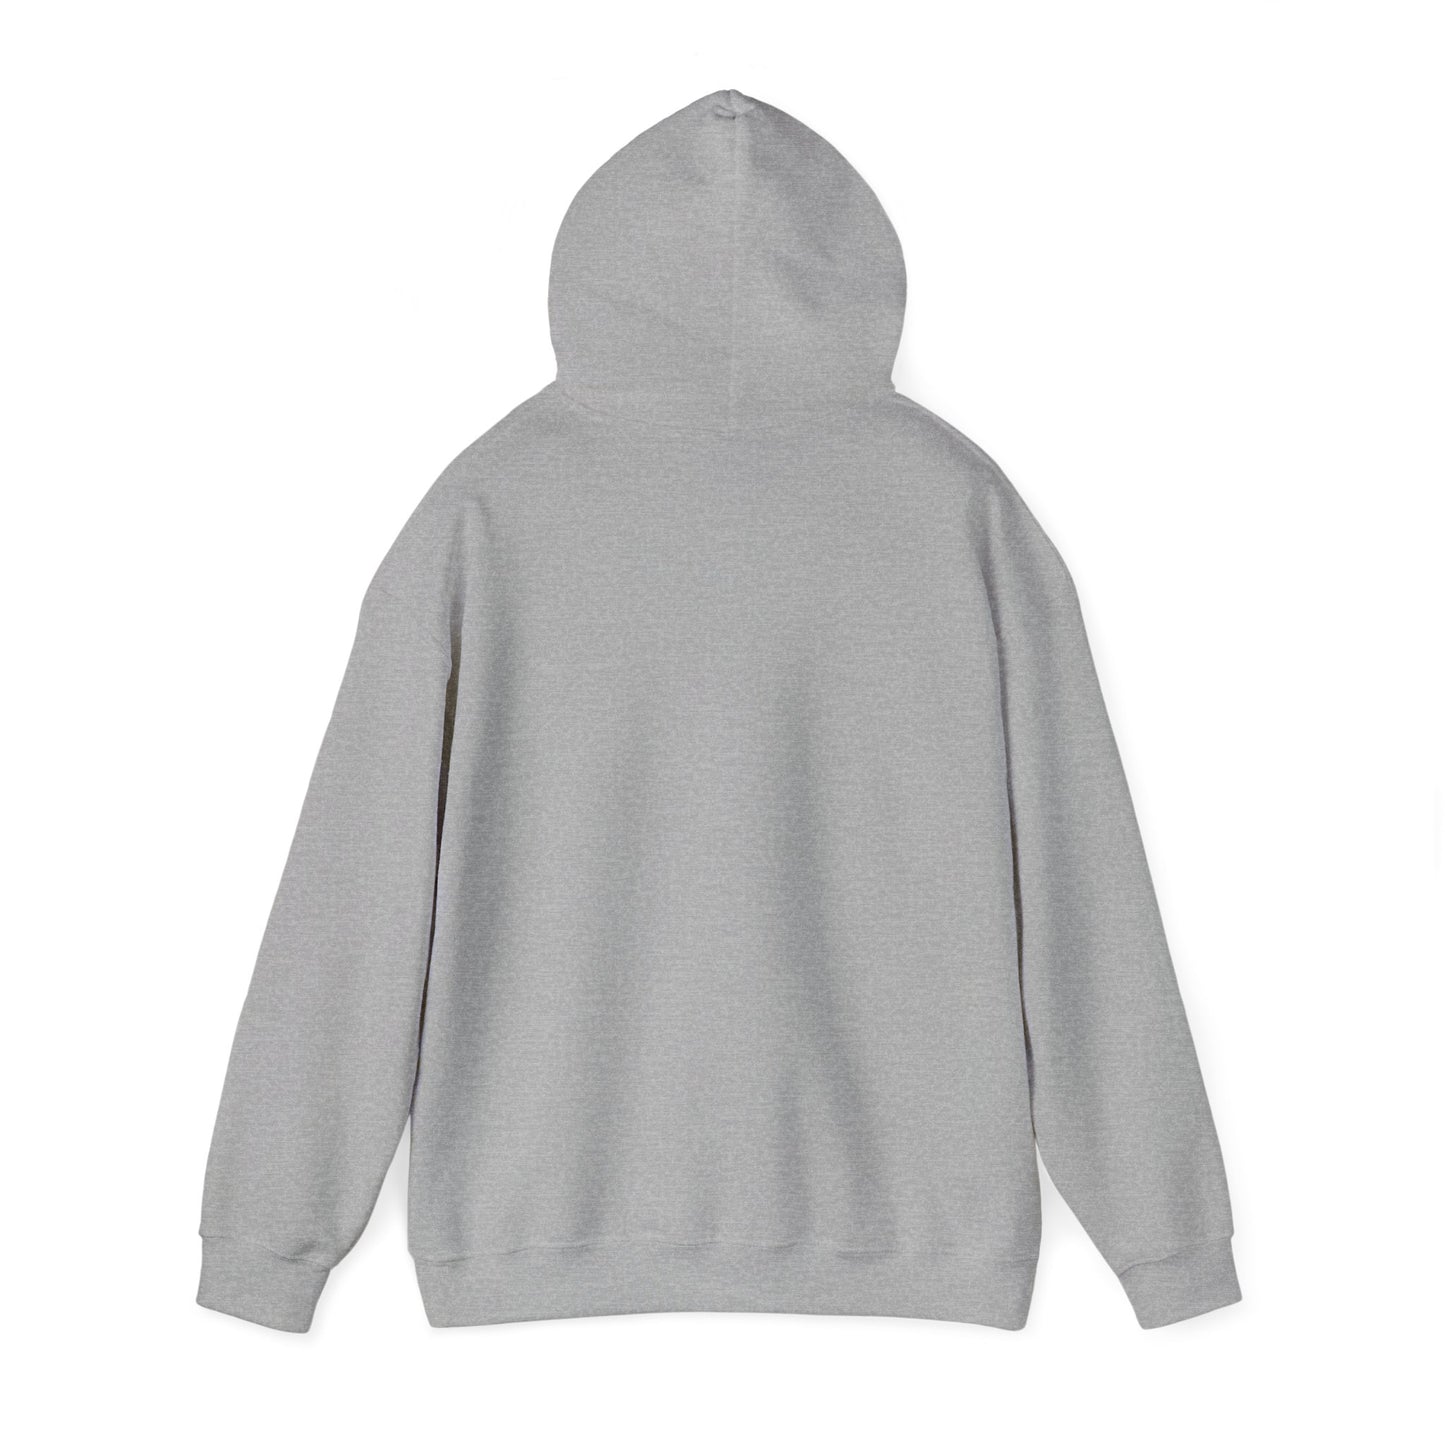 Unisex Heavy Blend™ Hooded Sweatshirt,  Happiness Culture